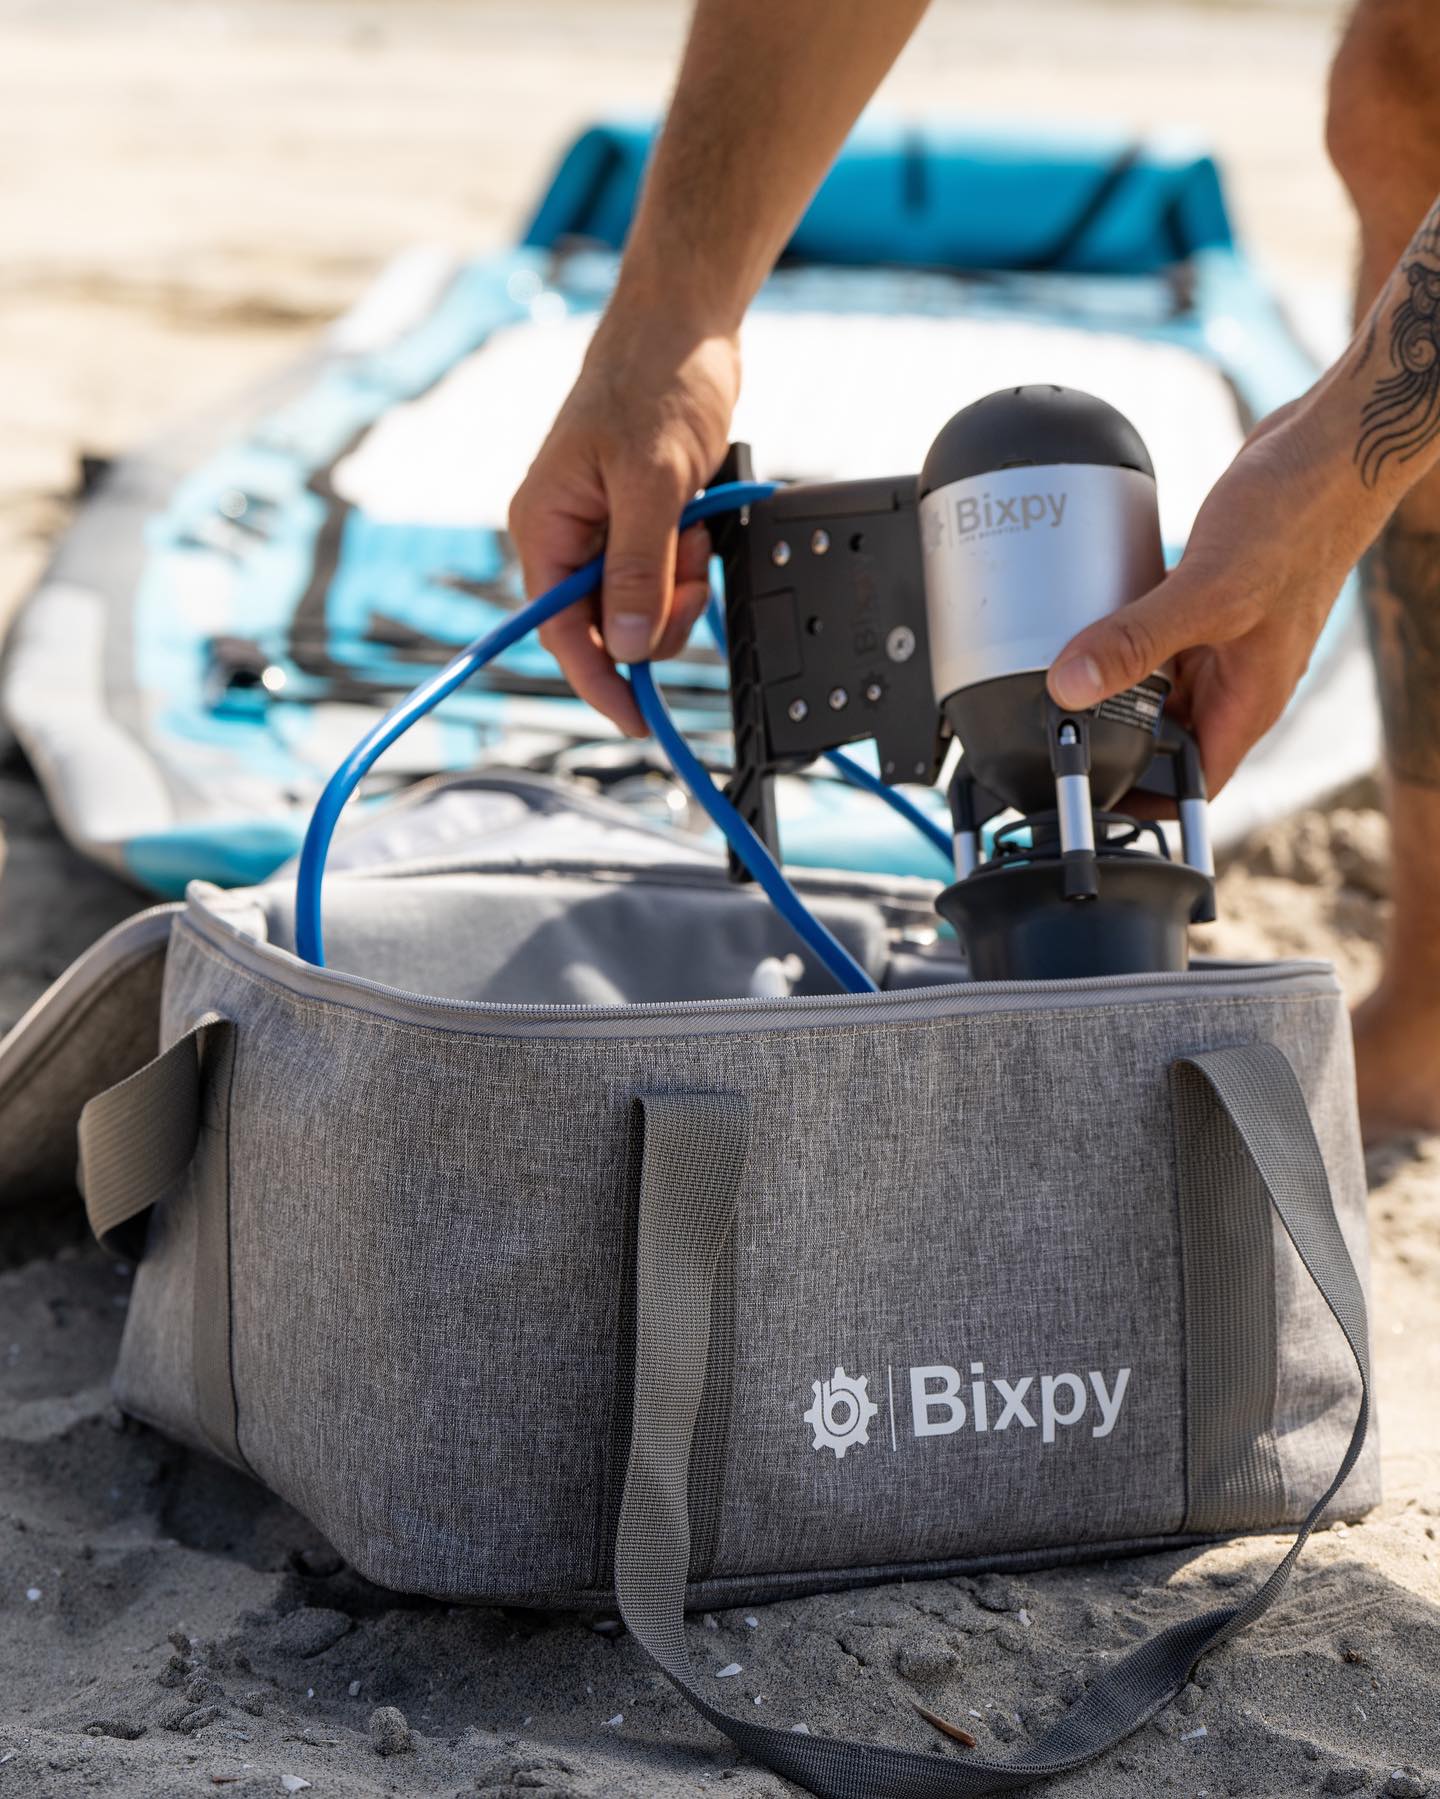 Bixpy K-1 Motor being put into waterproof bag